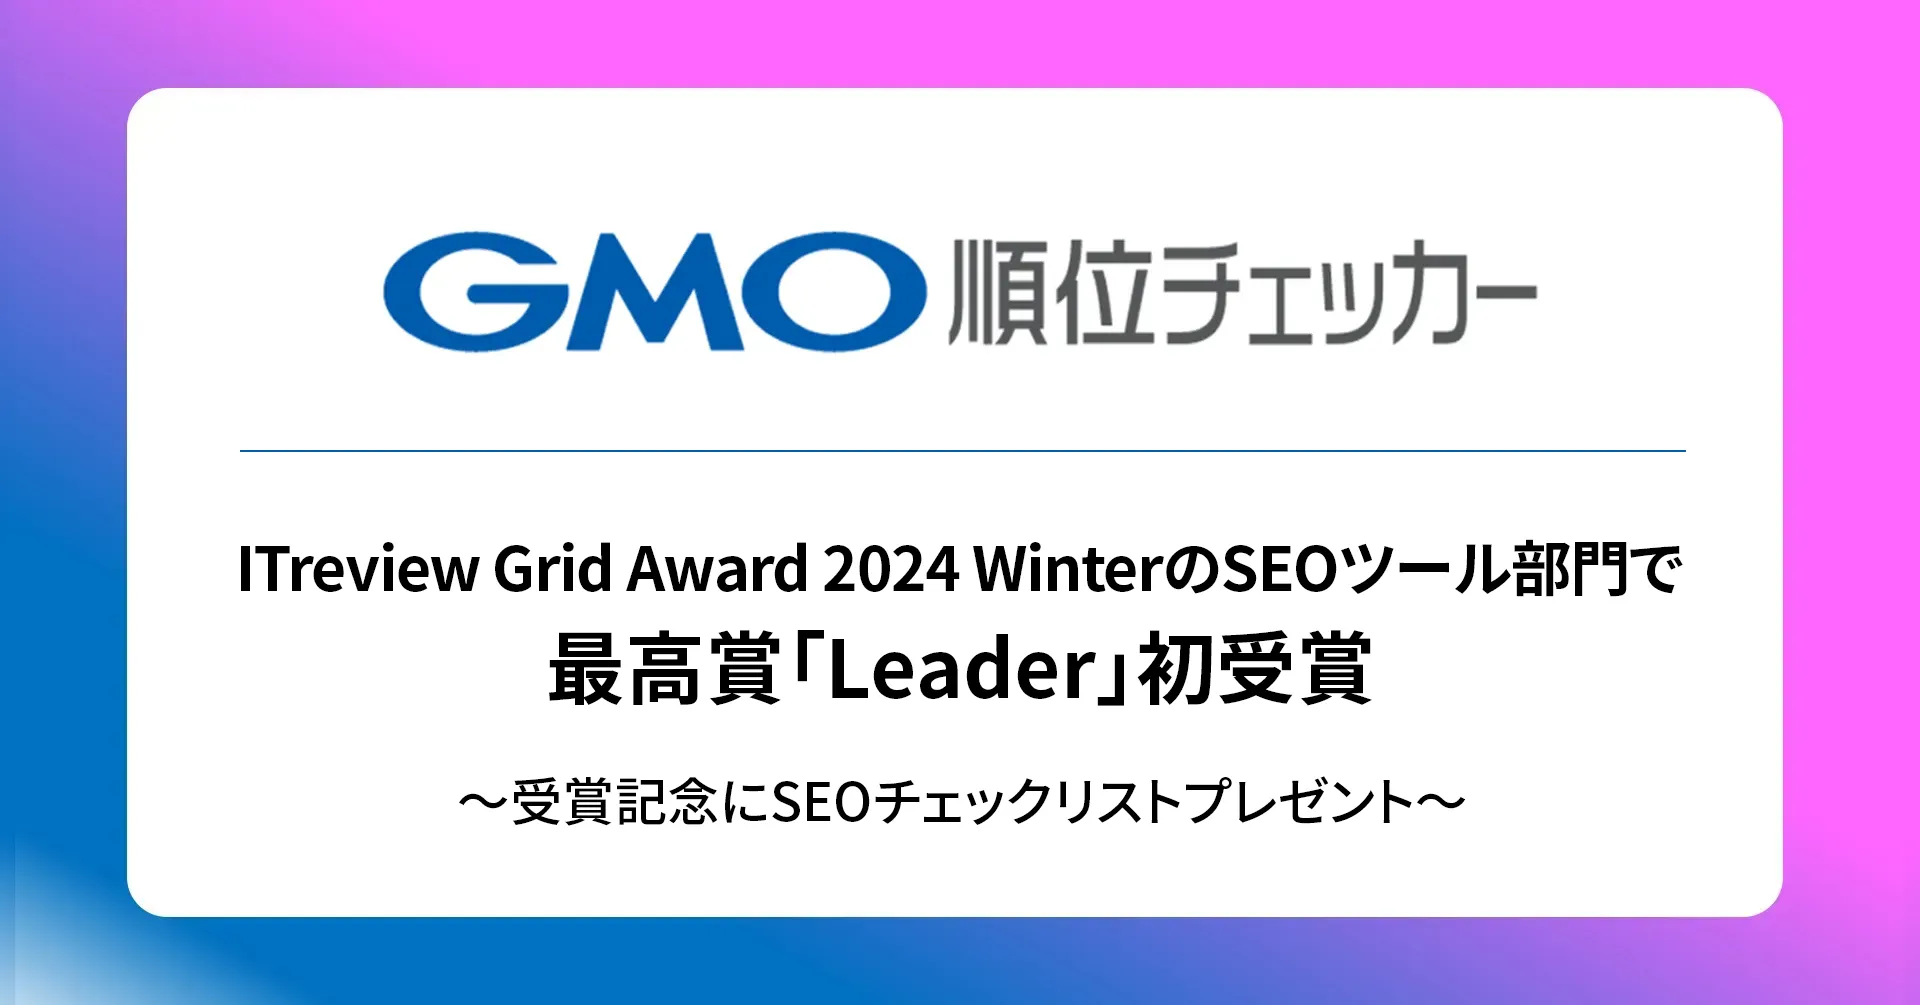 ITreview Grid Award 2024 WinterのSEOツール部門で最高賞「Leader」初受賞 ～受賞記念にSEOチェックリストプレゼント～